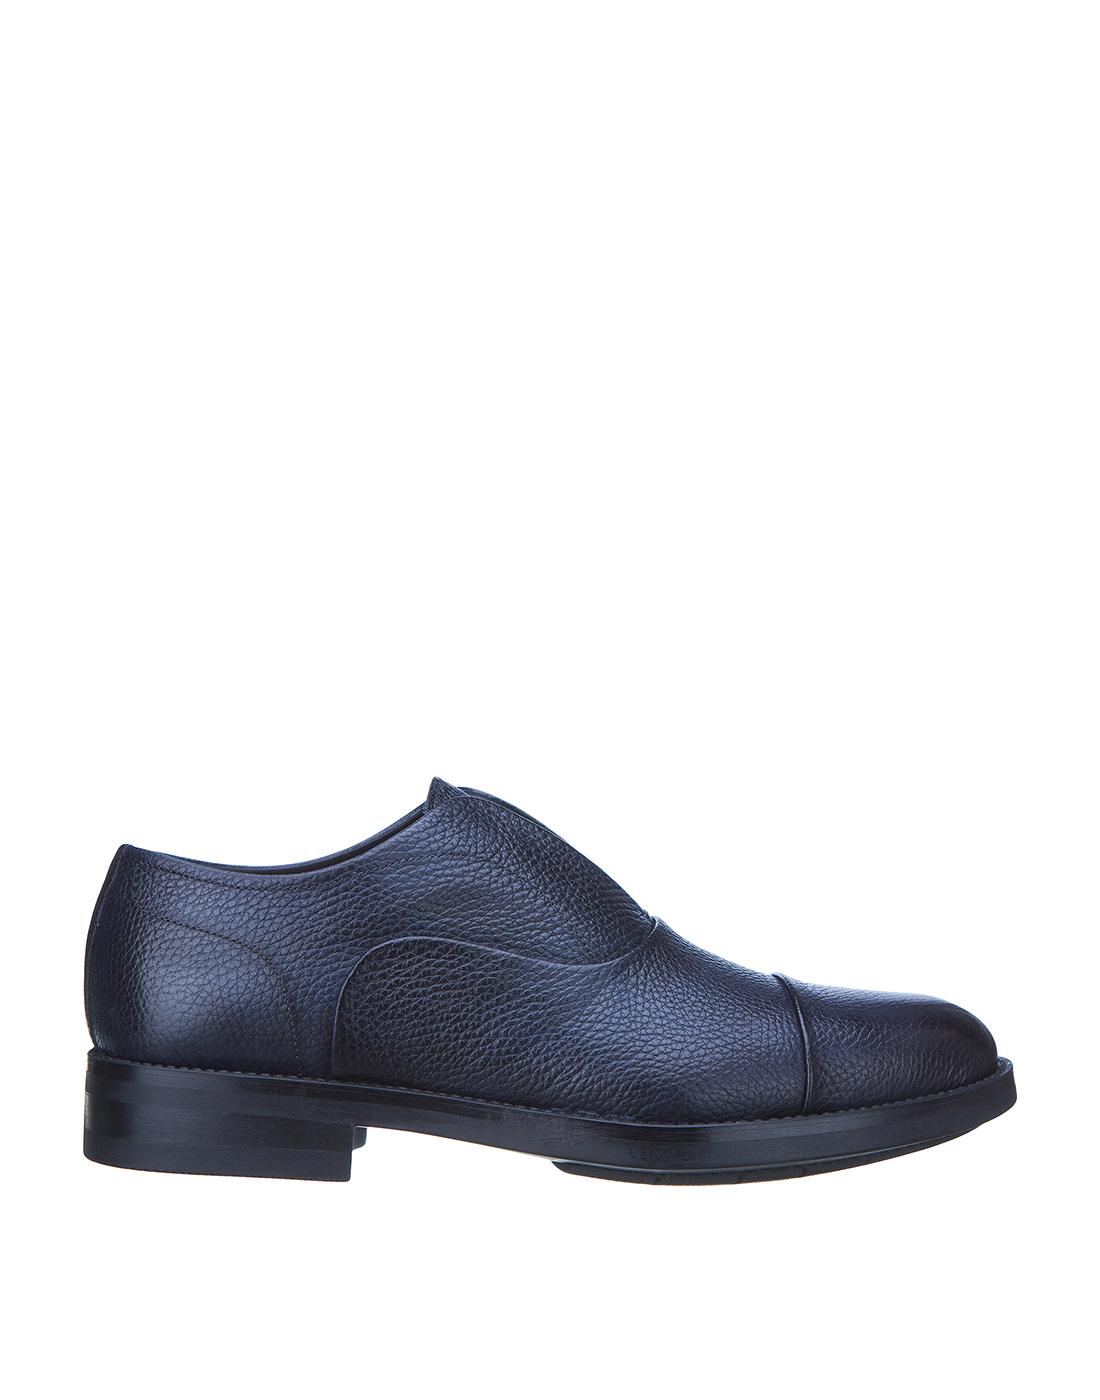 Туфли синие мужские Brecos S9136-1